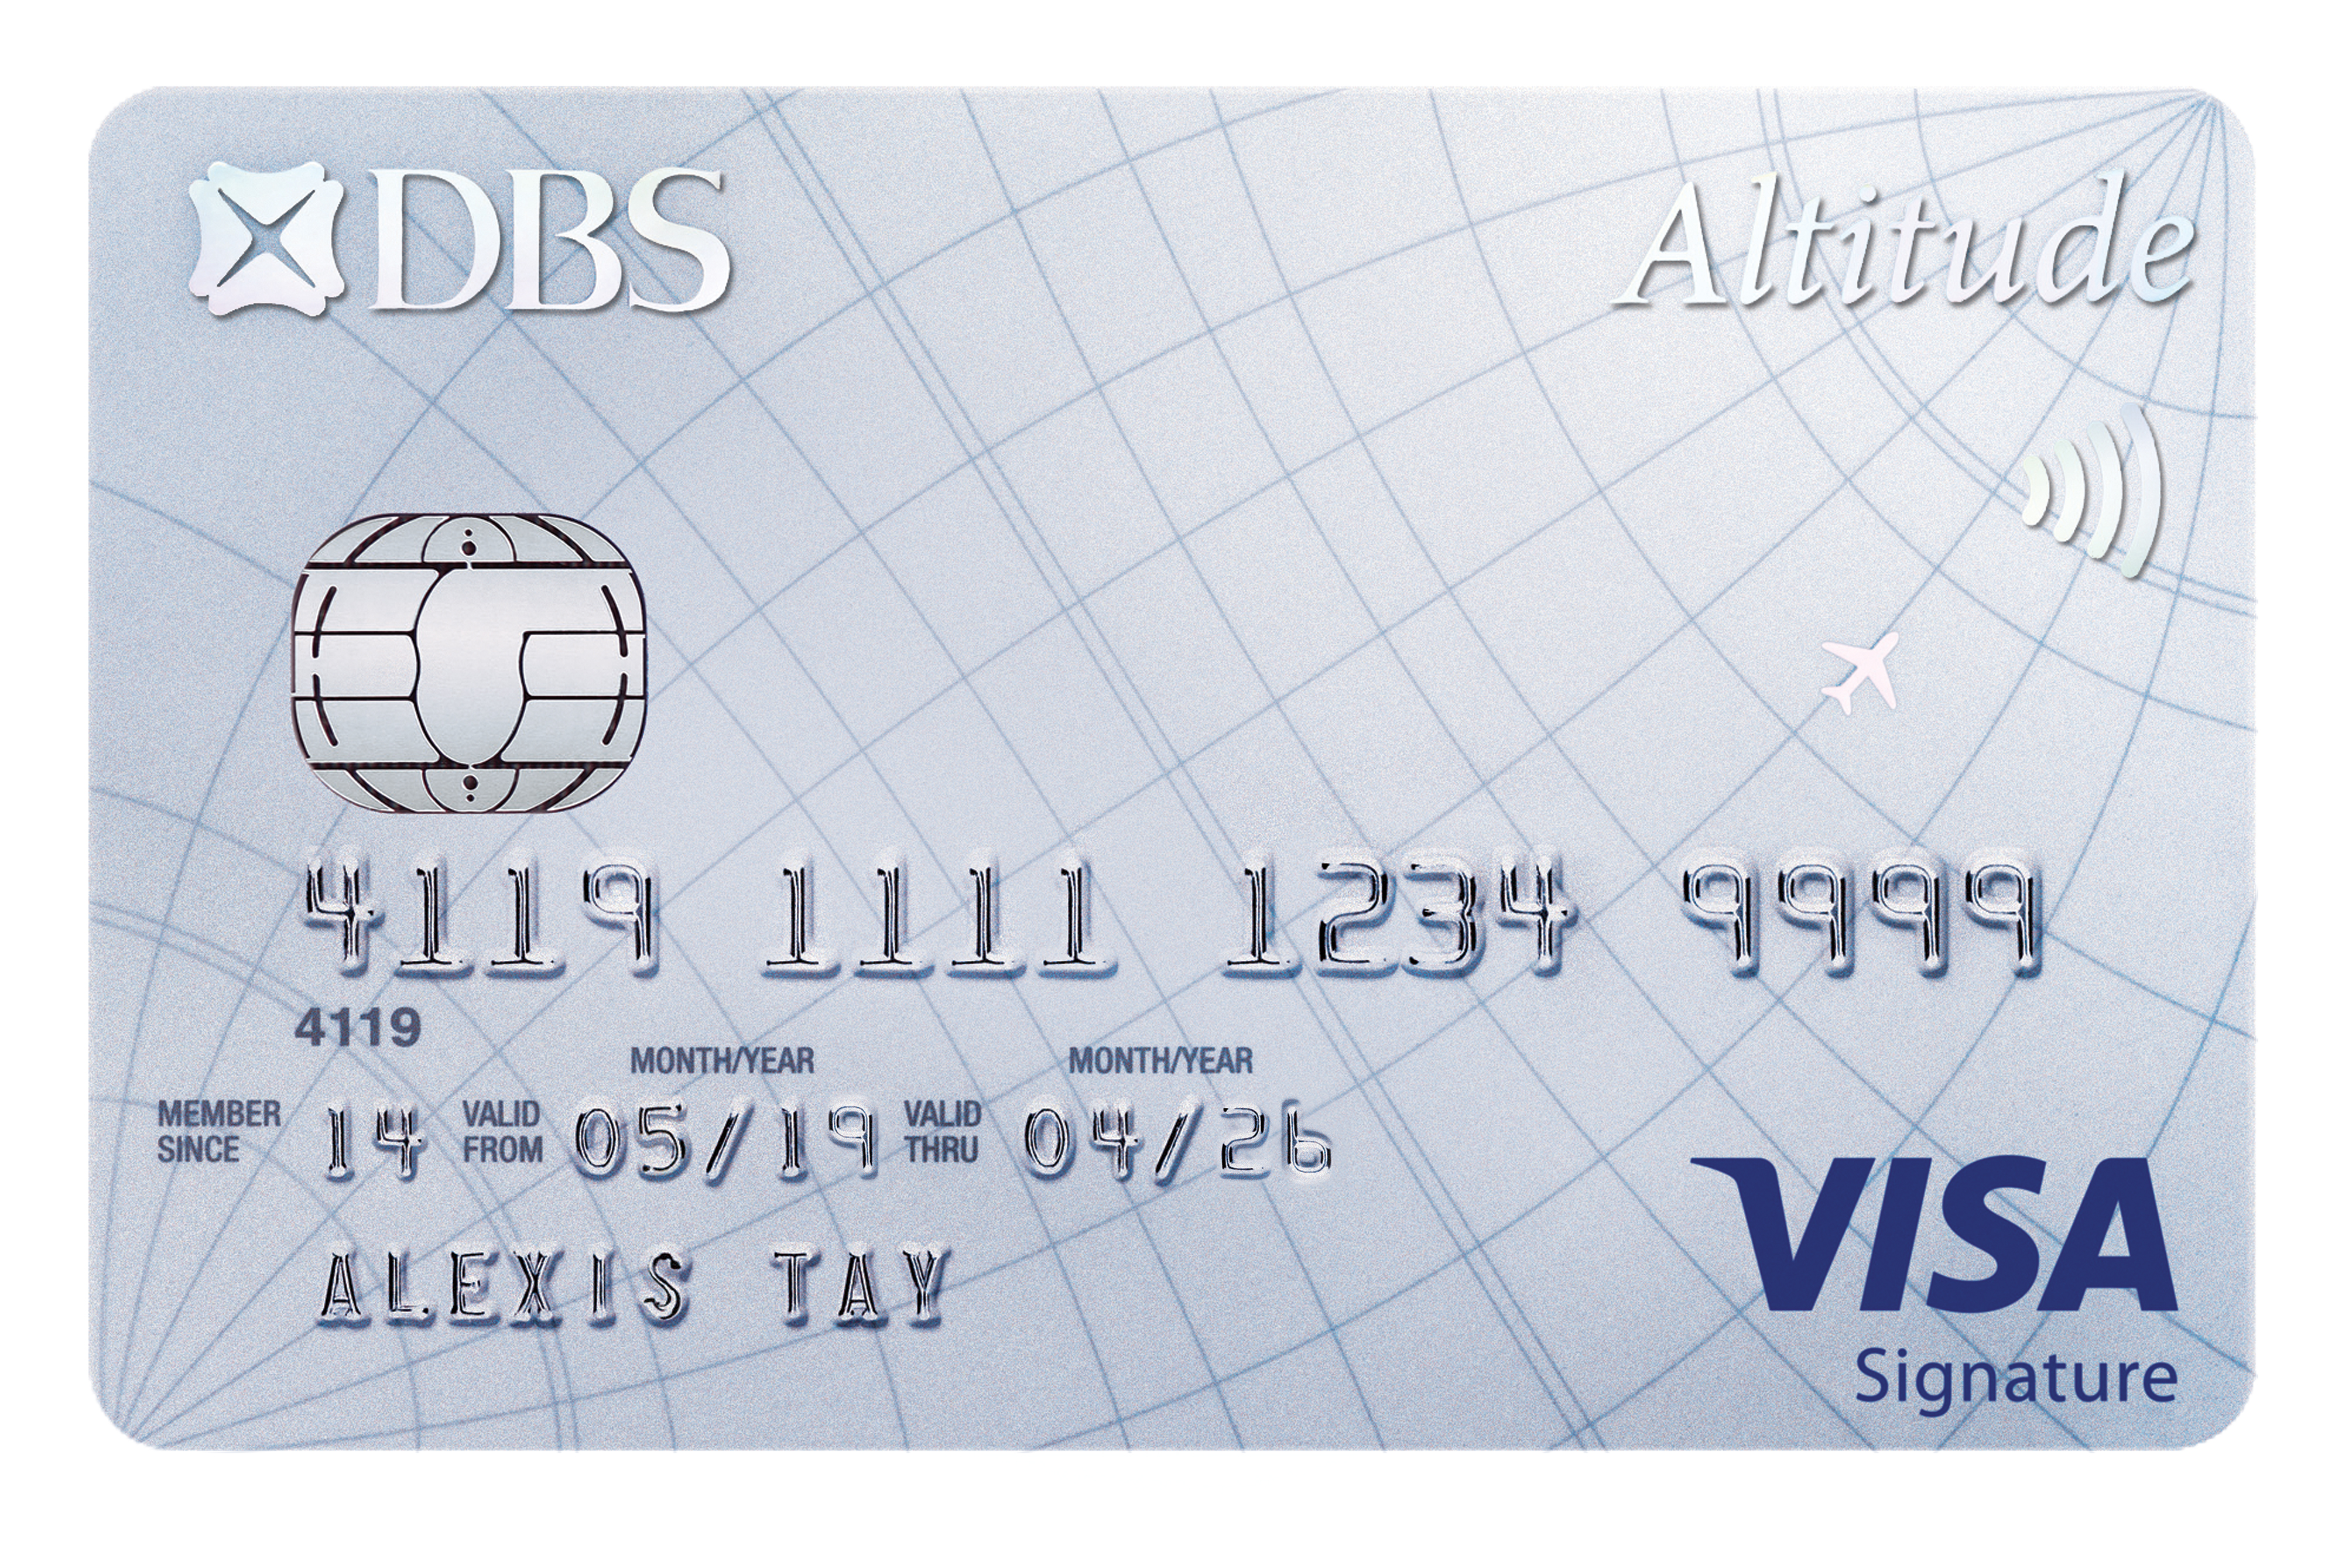 DBS Altitude Visa Card